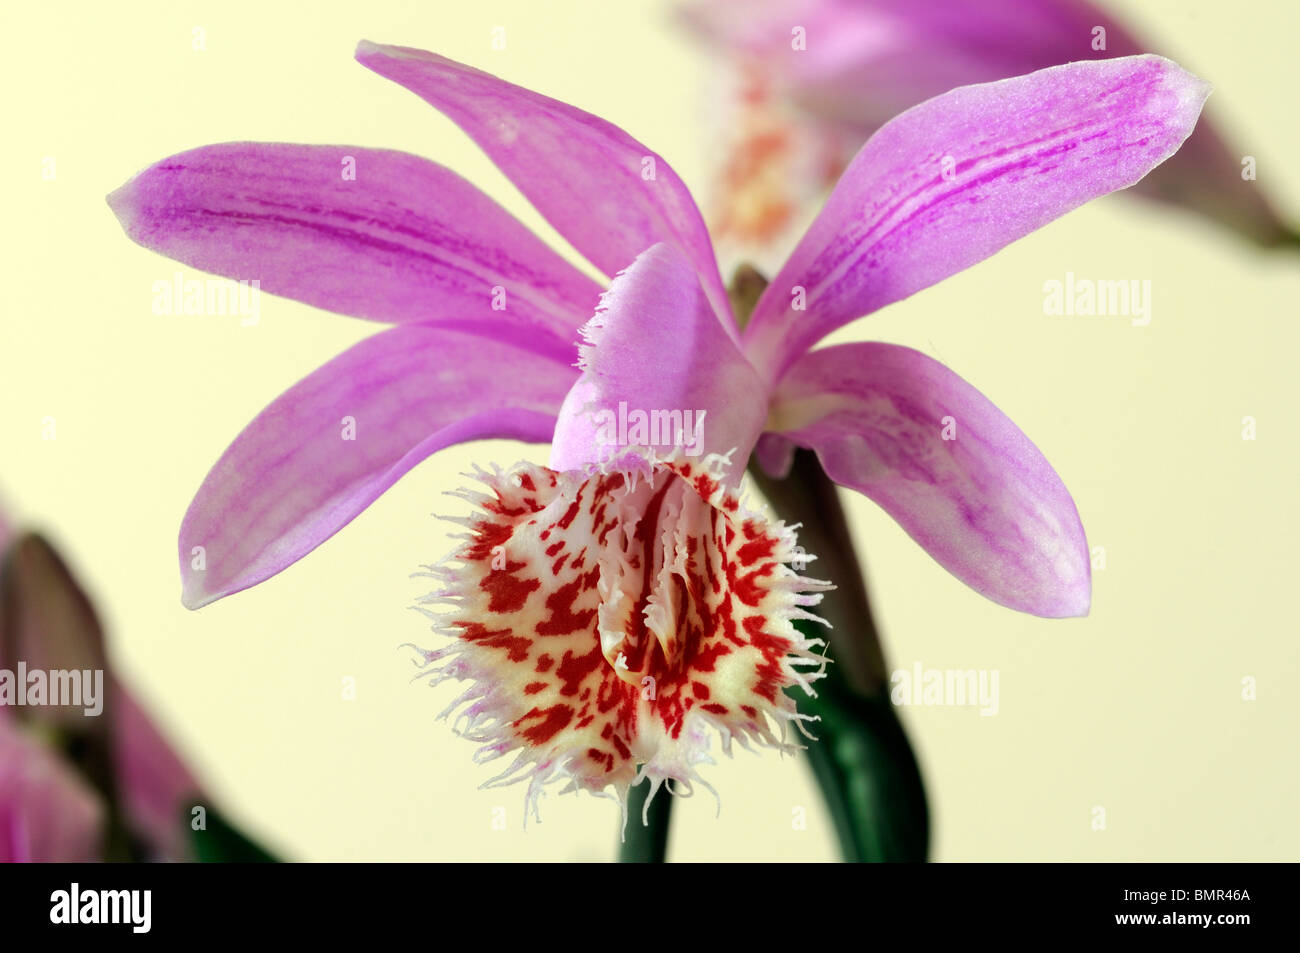 Pleione vesuvius windowsill orchid flower plant pink purple set contrast contrasted white background Stock Photo